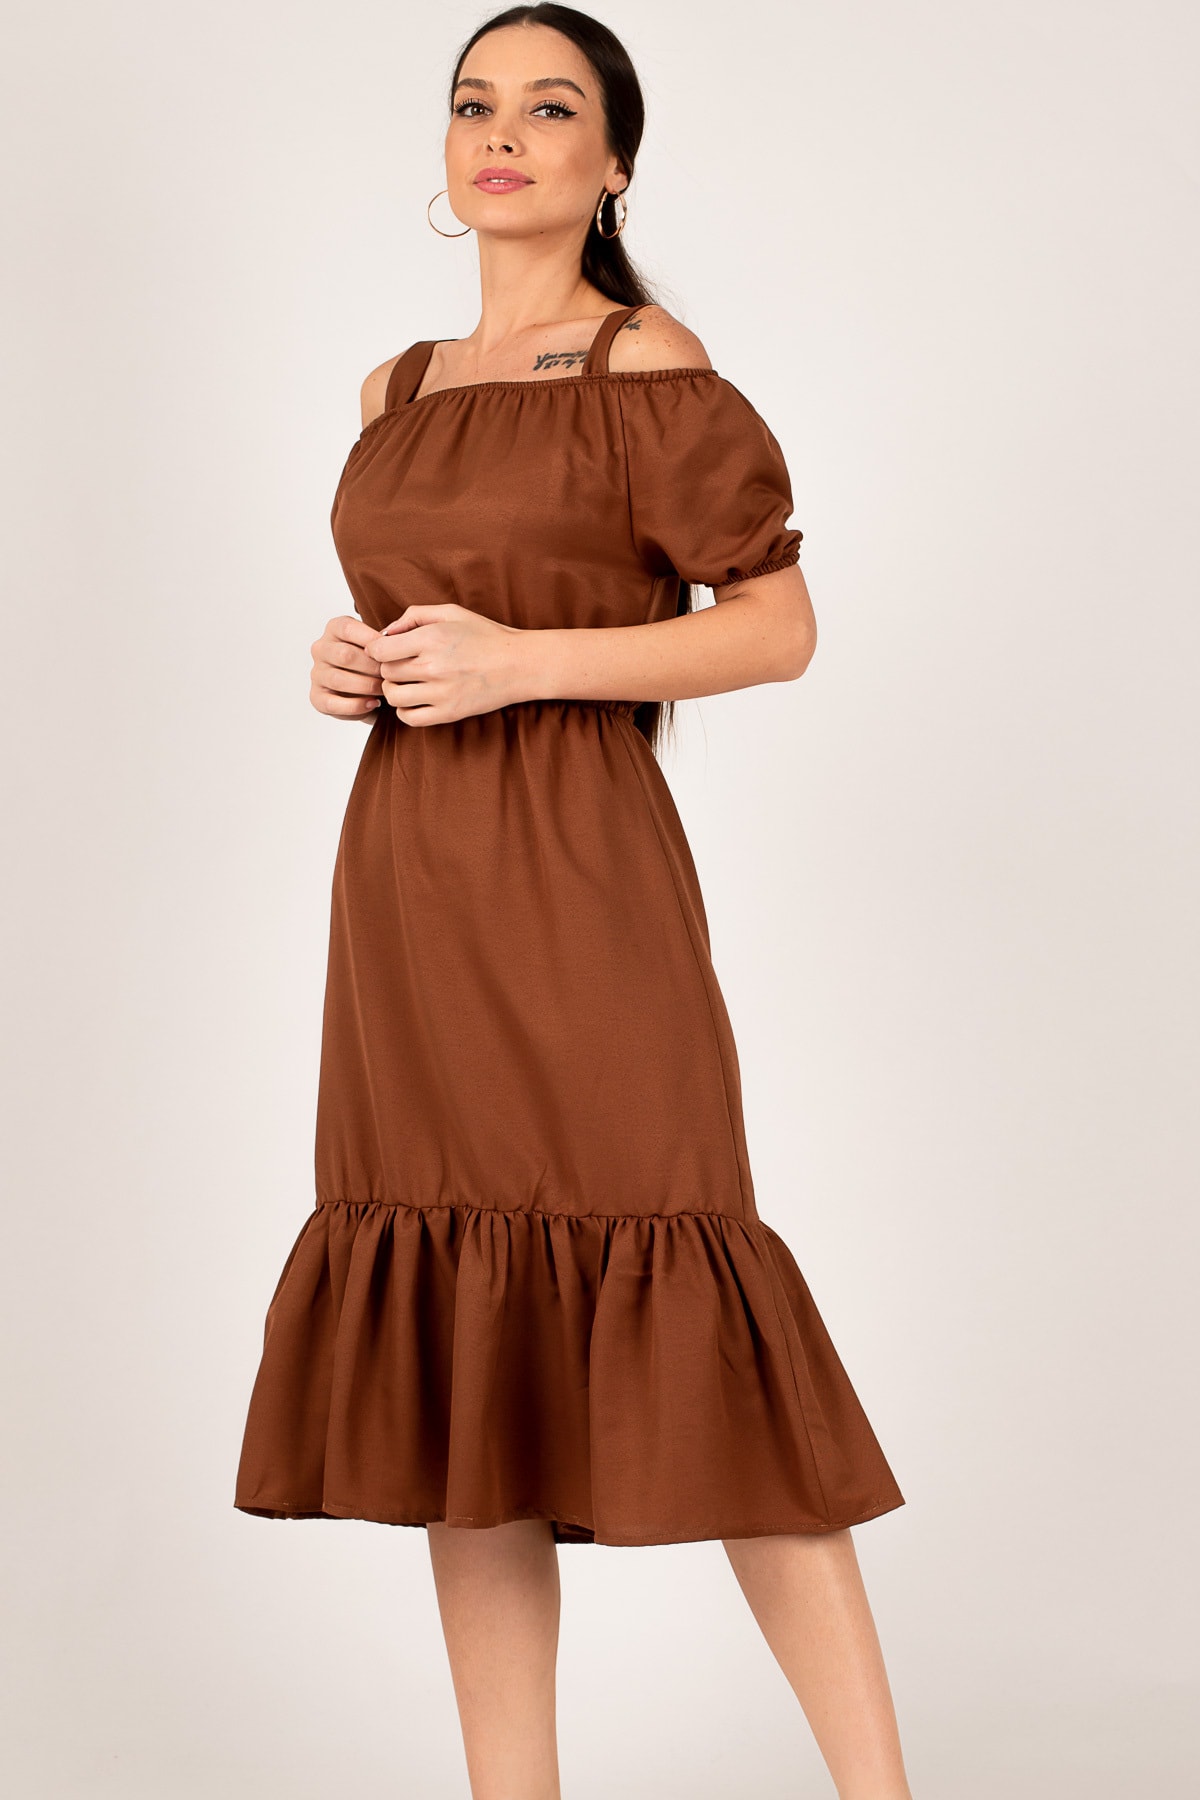 Armonika Women's Brown Elastic Waist Strap Dress